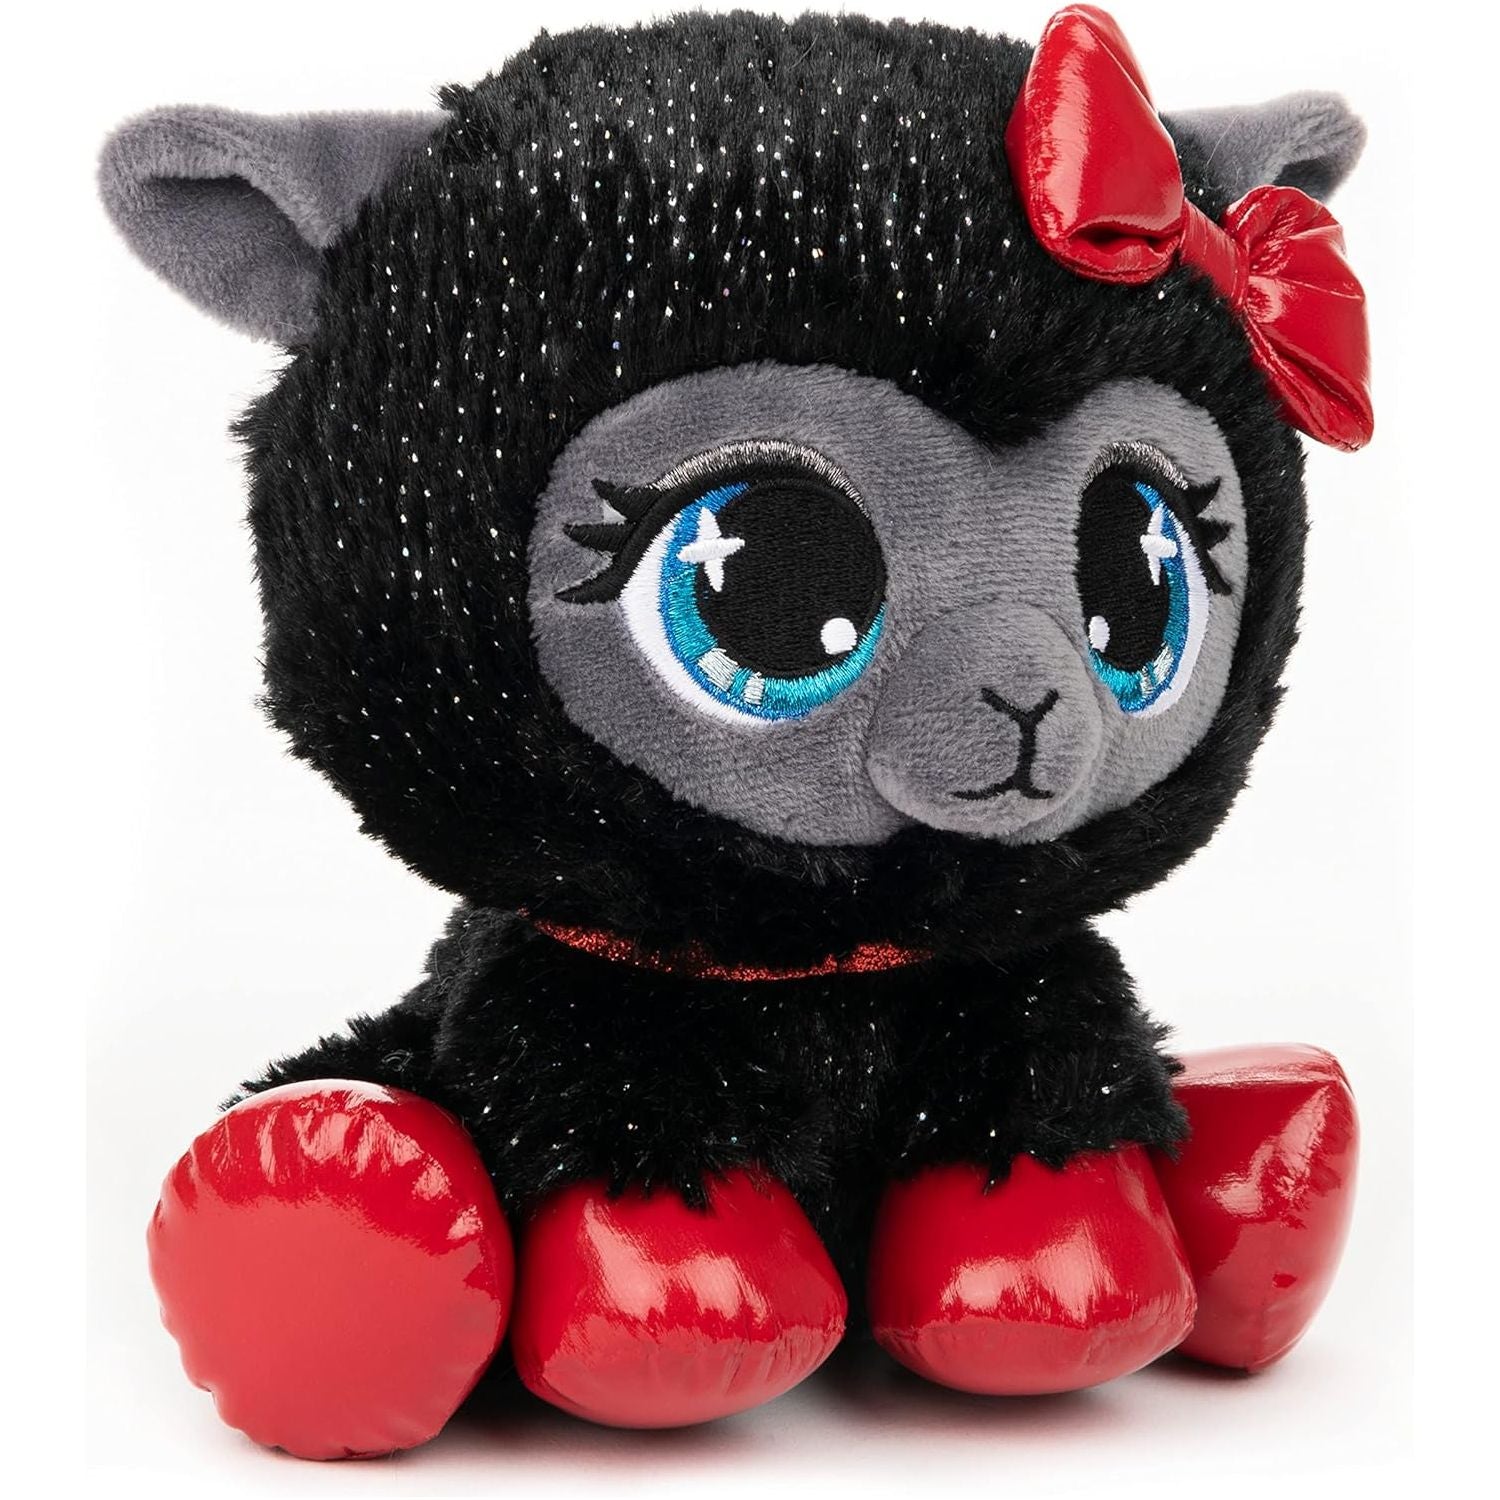 GUND P.Lushes Designer Fashion Pets Special-Edition Ba-Bah Noir Llama Premium Stuffed Animal, Black and Red, 6